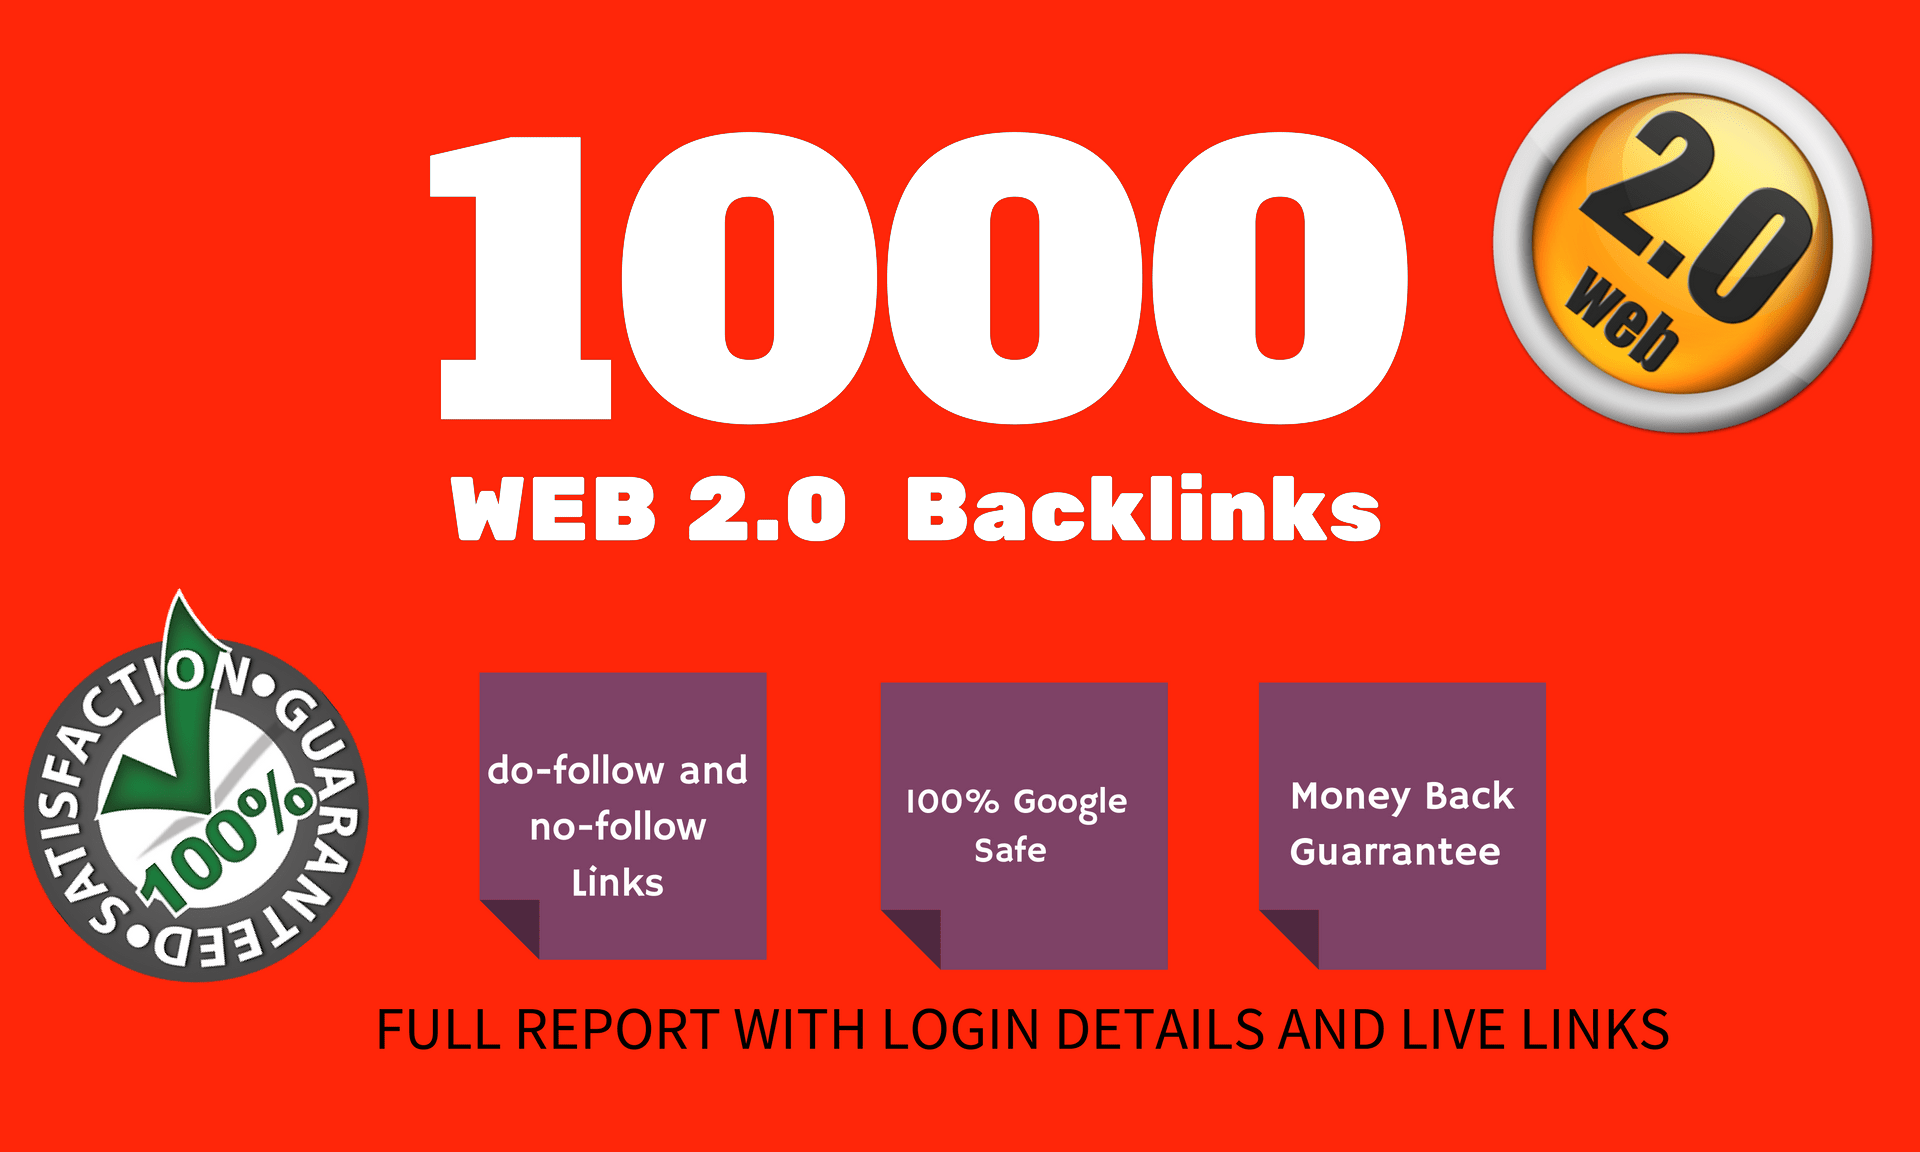 web 2.0 backlinks sites list